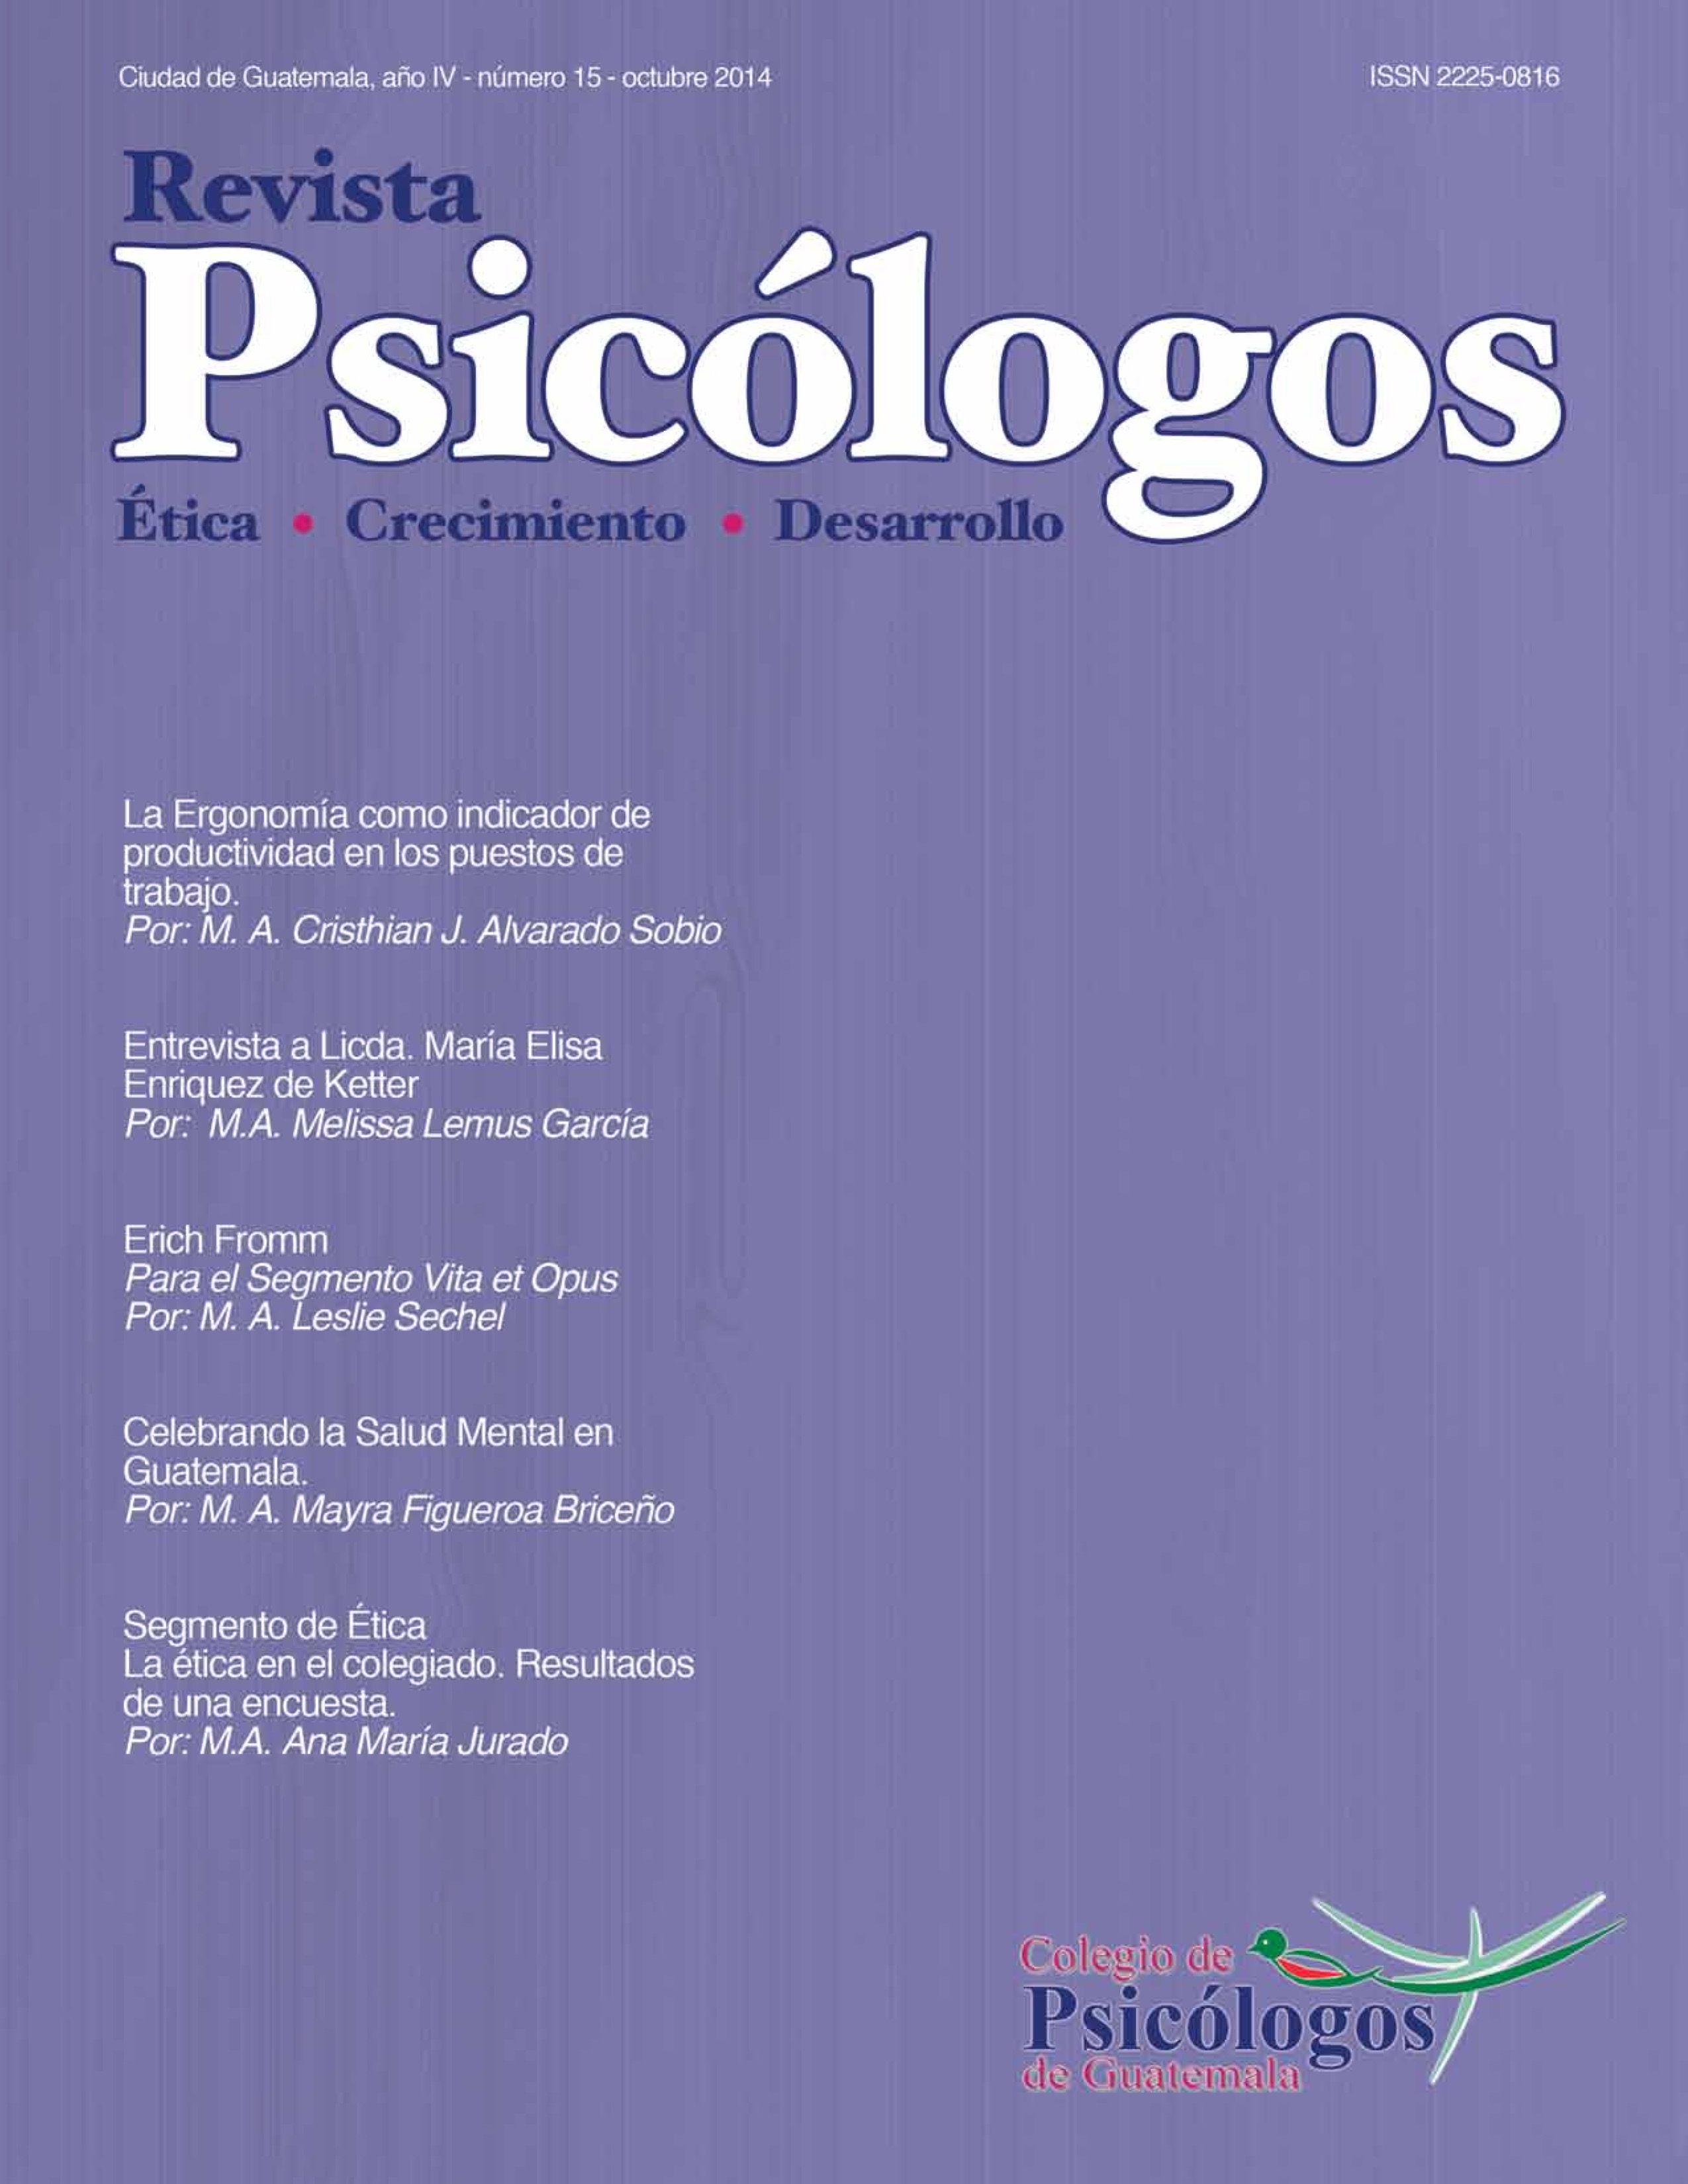 					Ver Vol. 4 Núm. 15 (2014): Revista Psicólogos No. 15
				